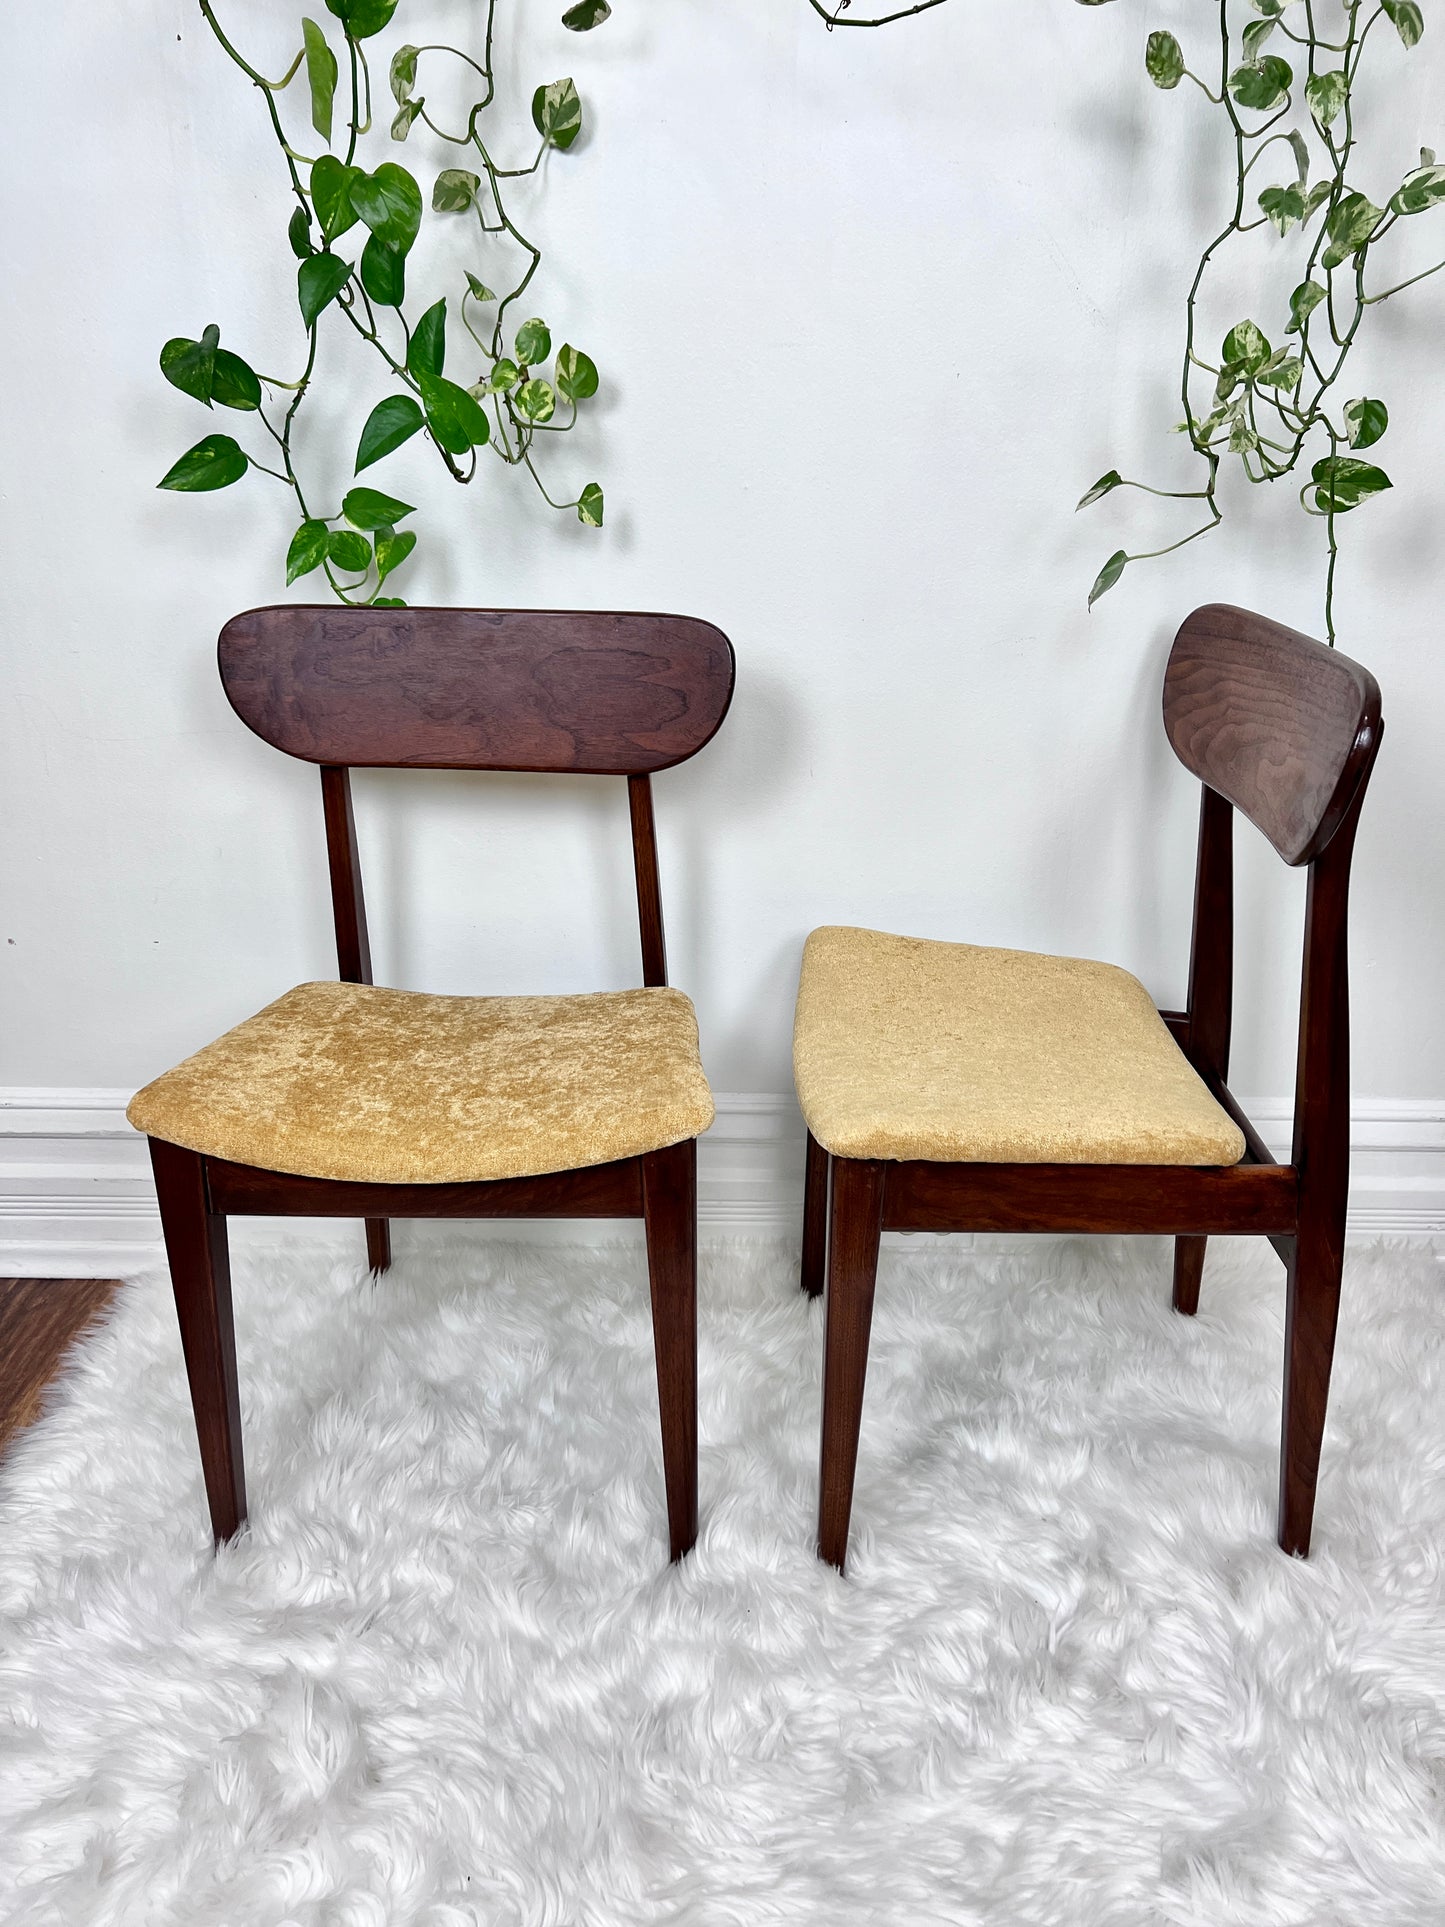 The Valmar Chairs